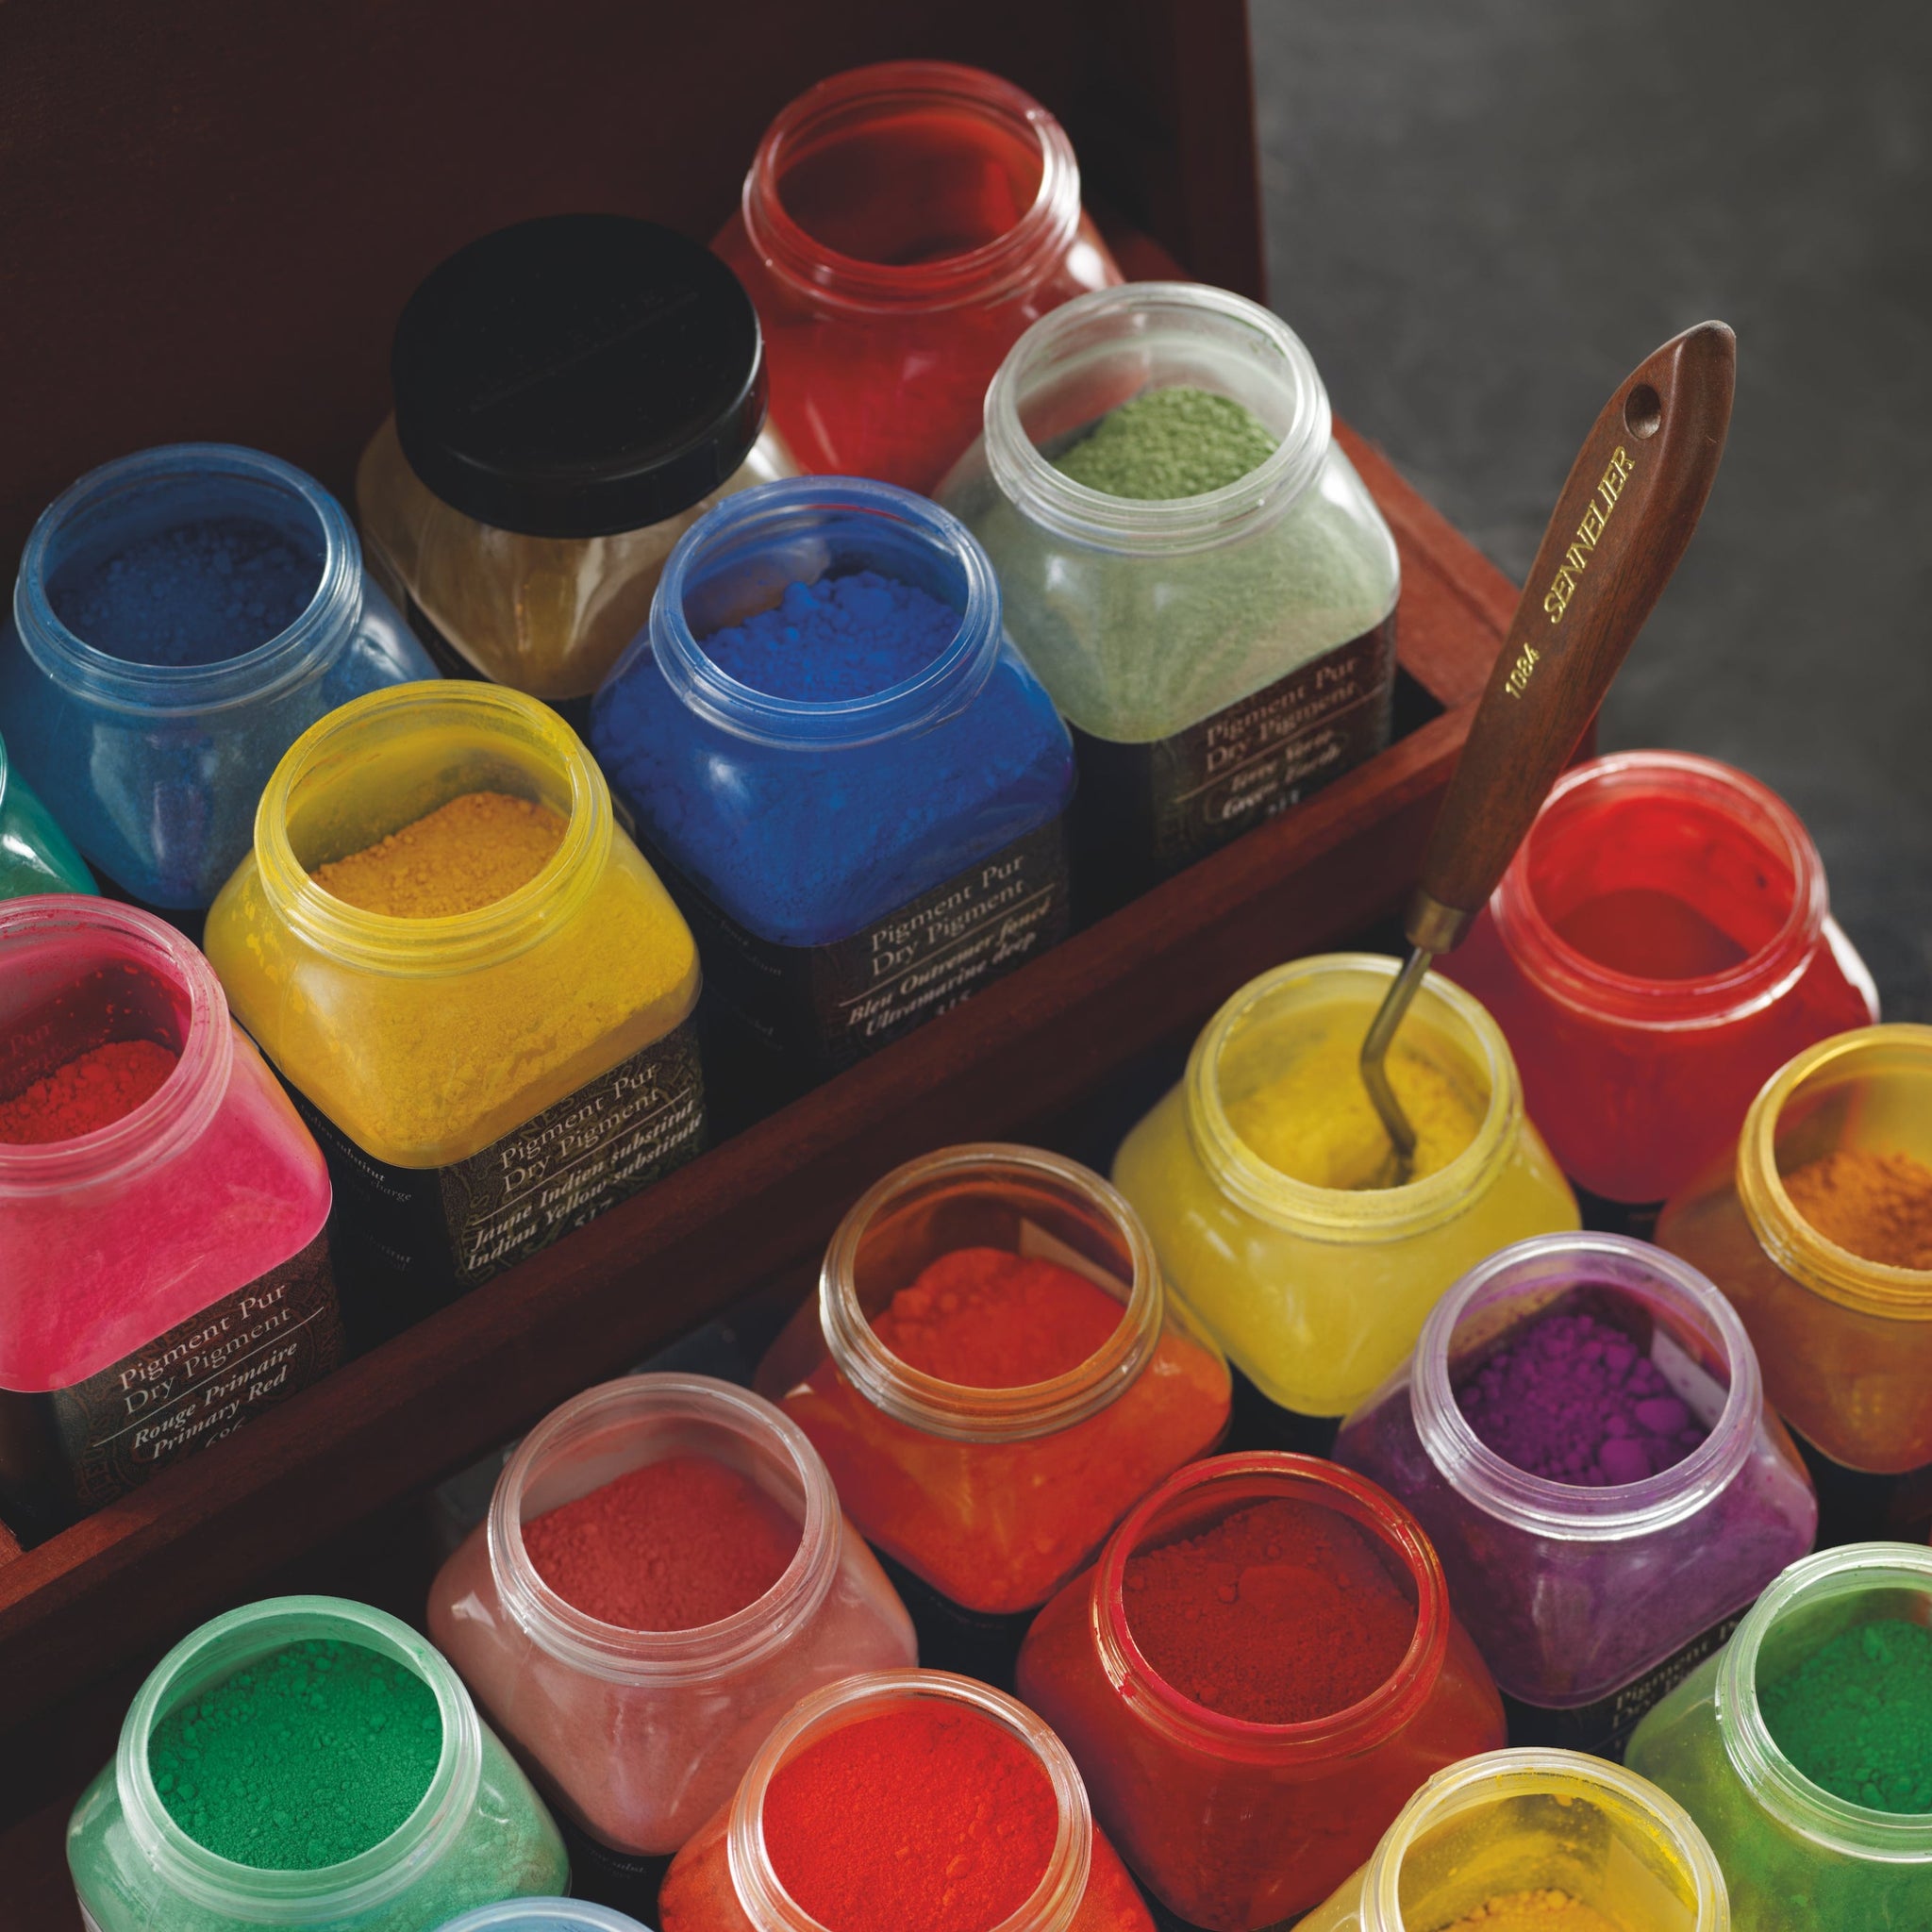 Sennelier Artist Pigments - Melbourne Etching Supplies